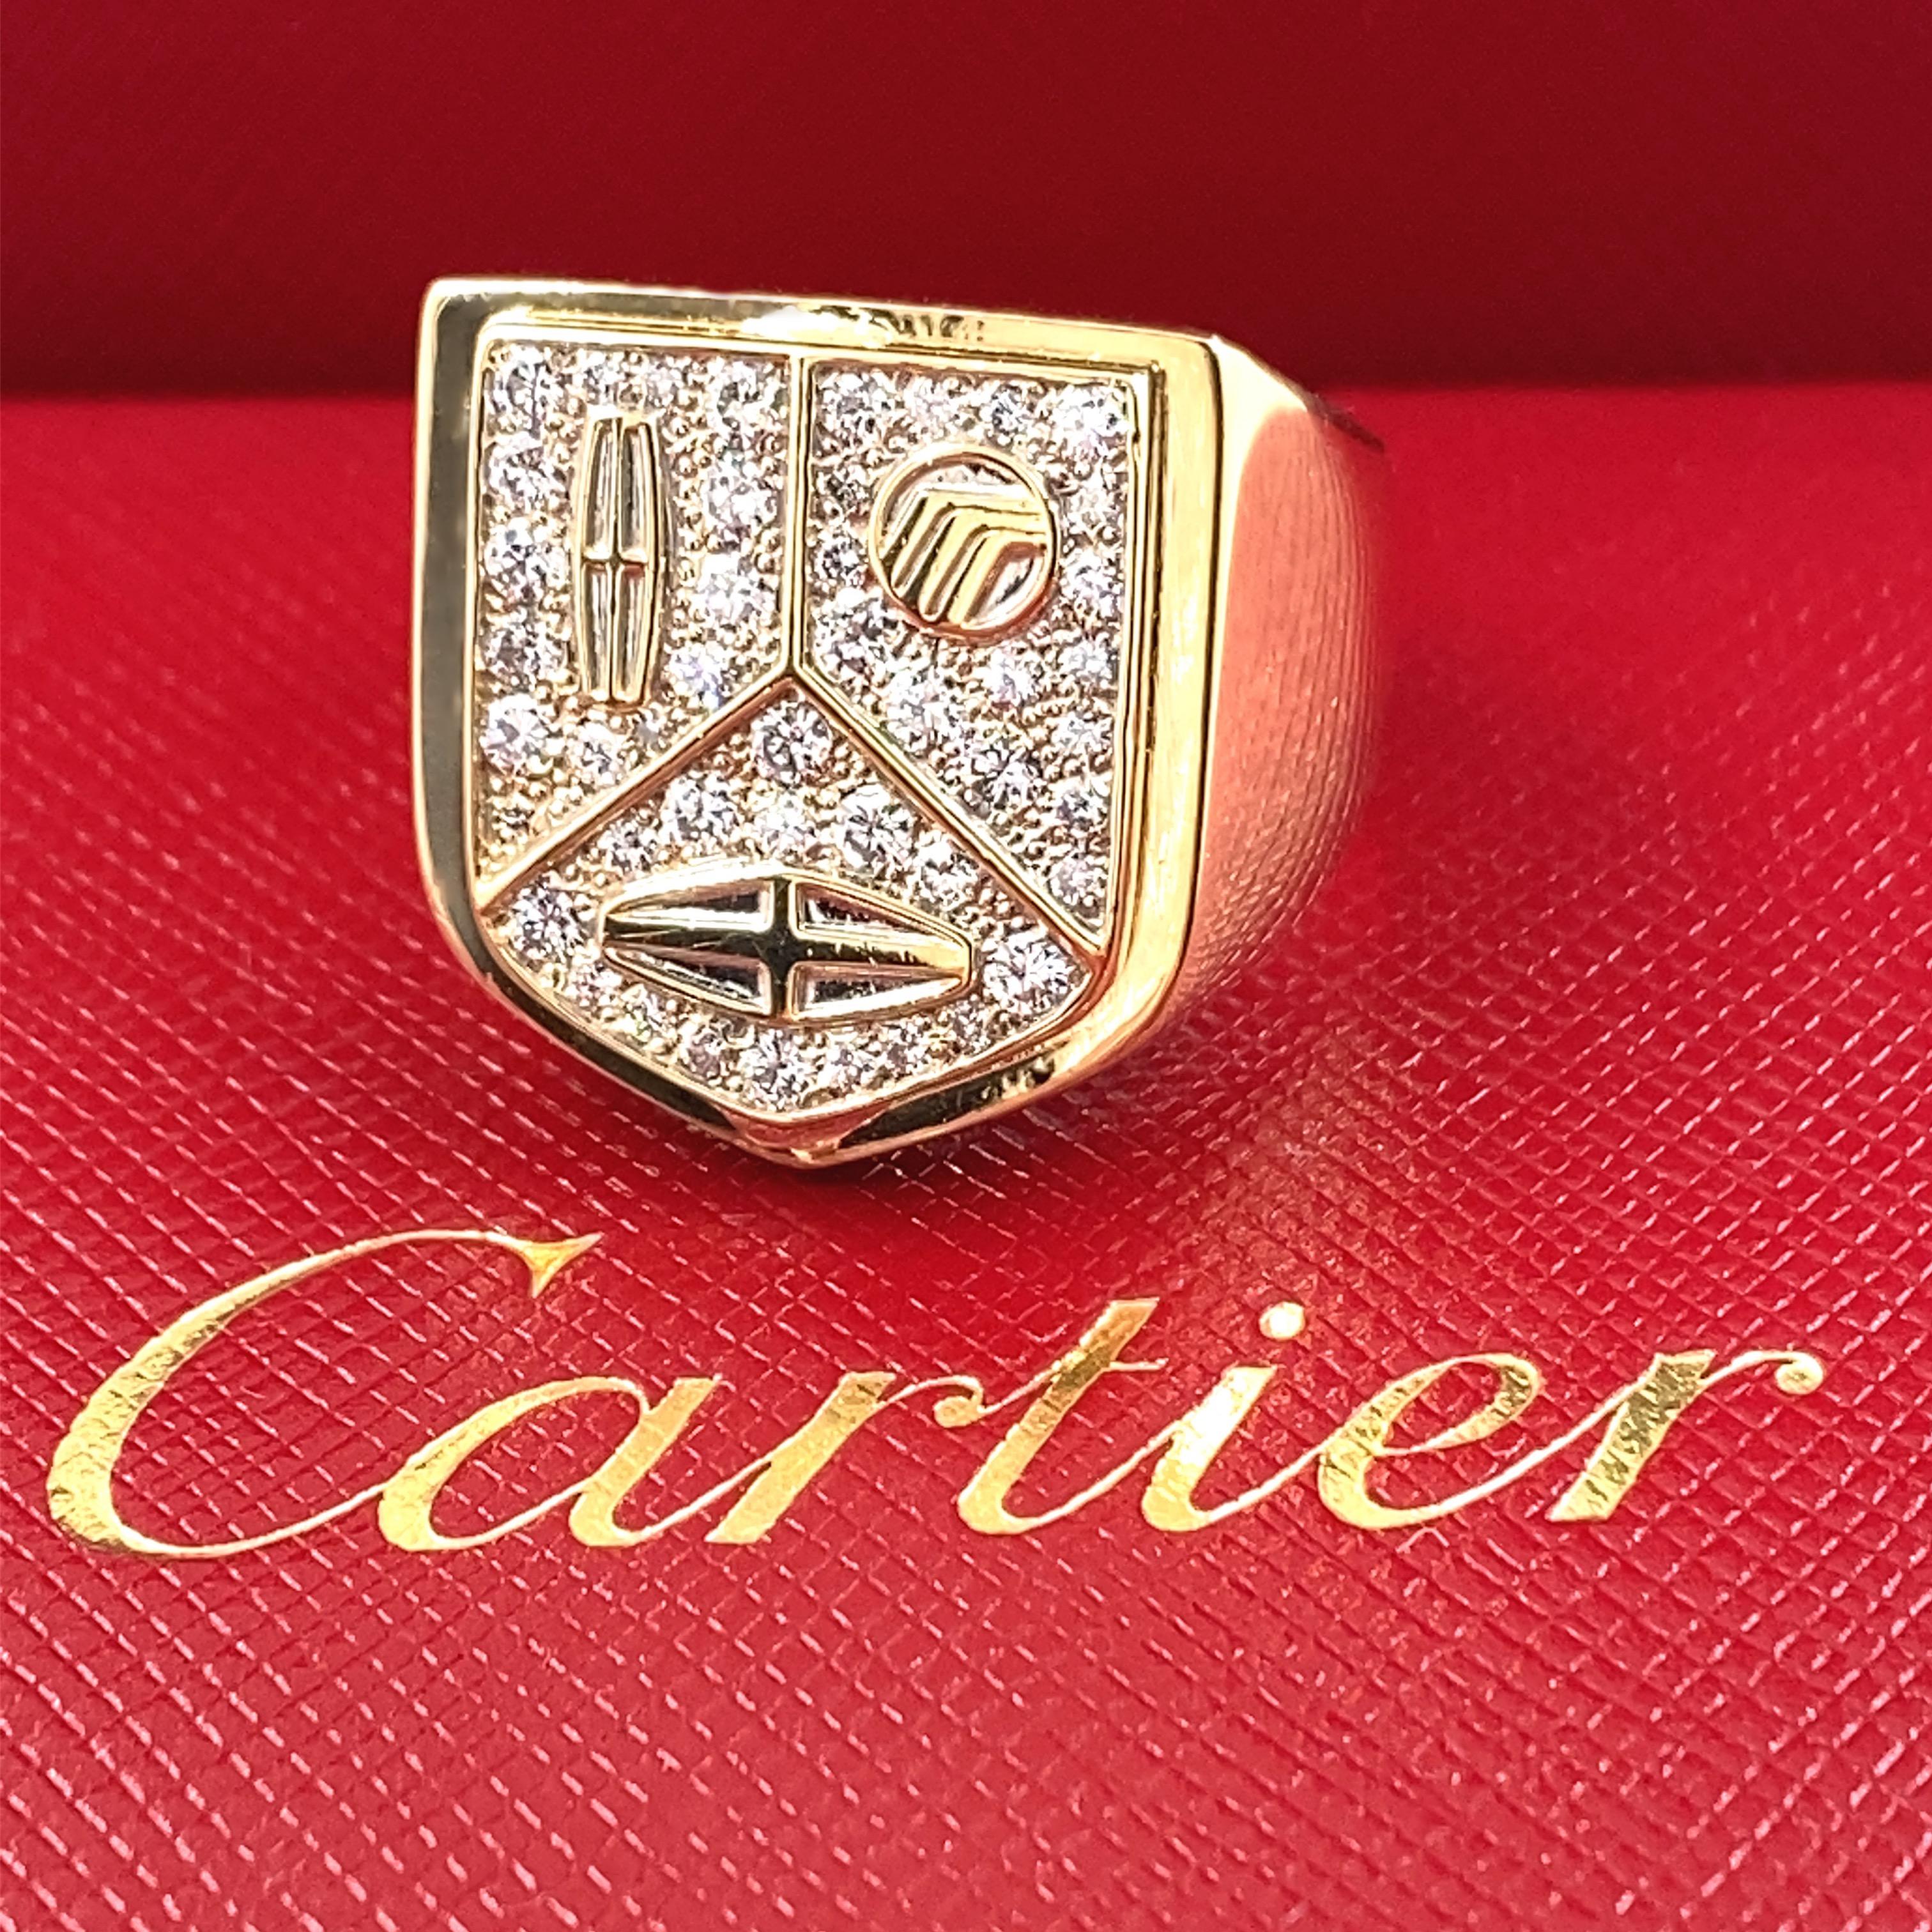 Vintage Circa 1985 Limited Edition Cartier Lincoln Mercury Merkur Diamond Signet Ring
Style:  Signet
Metal:  18kt Yellow Gold
Size:  9.5 sizable
TCW:  0.70 tcw
Main Diamond:  44 Round Brilliant Diamonds 0.70 tcw
Color & Clarity:  E - F, VS1 -